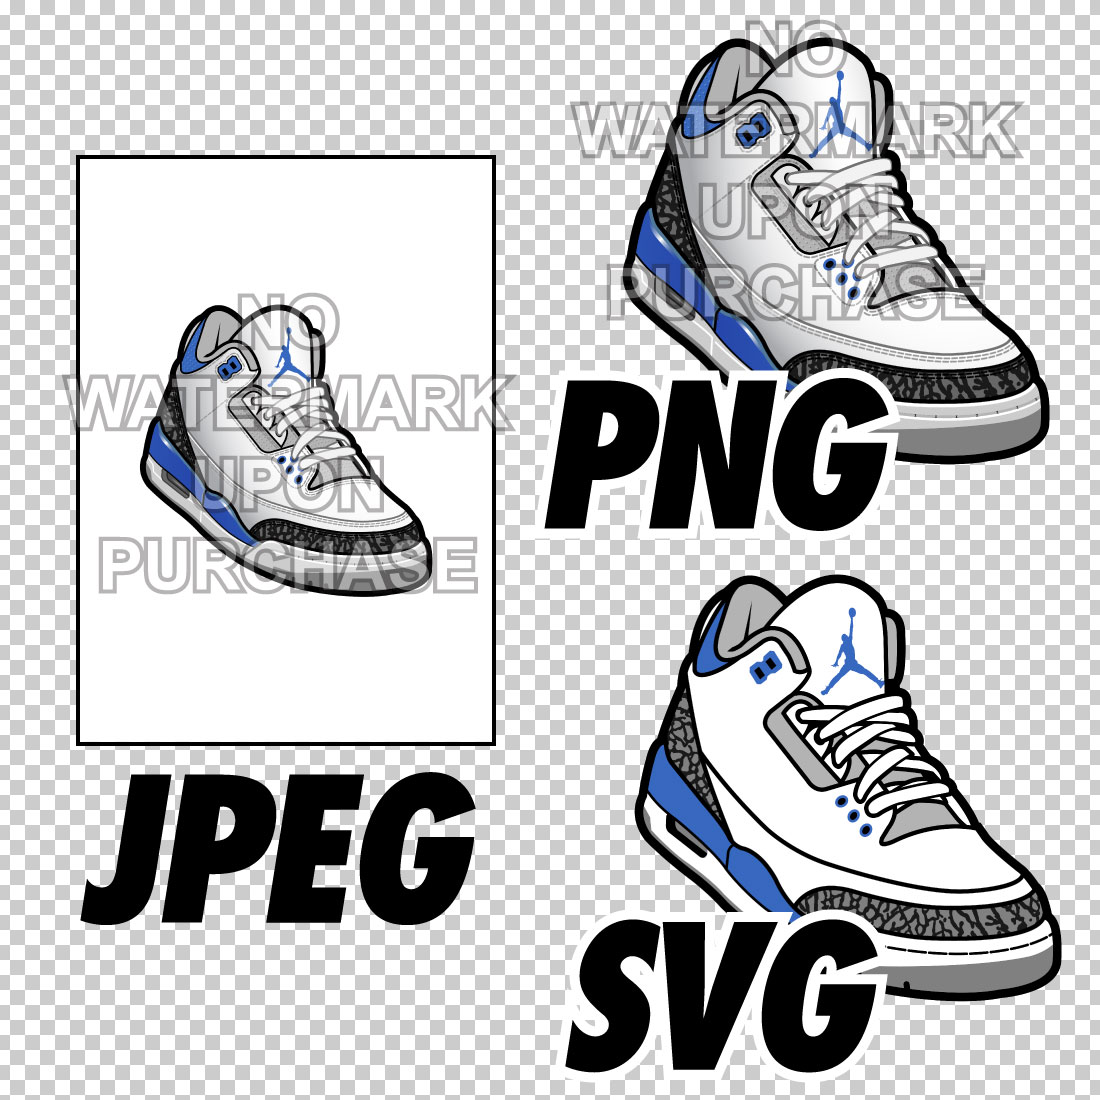 Air Jordan 3 Racer Blue JPEG PNG SVG right & left shoe bundle preview image.